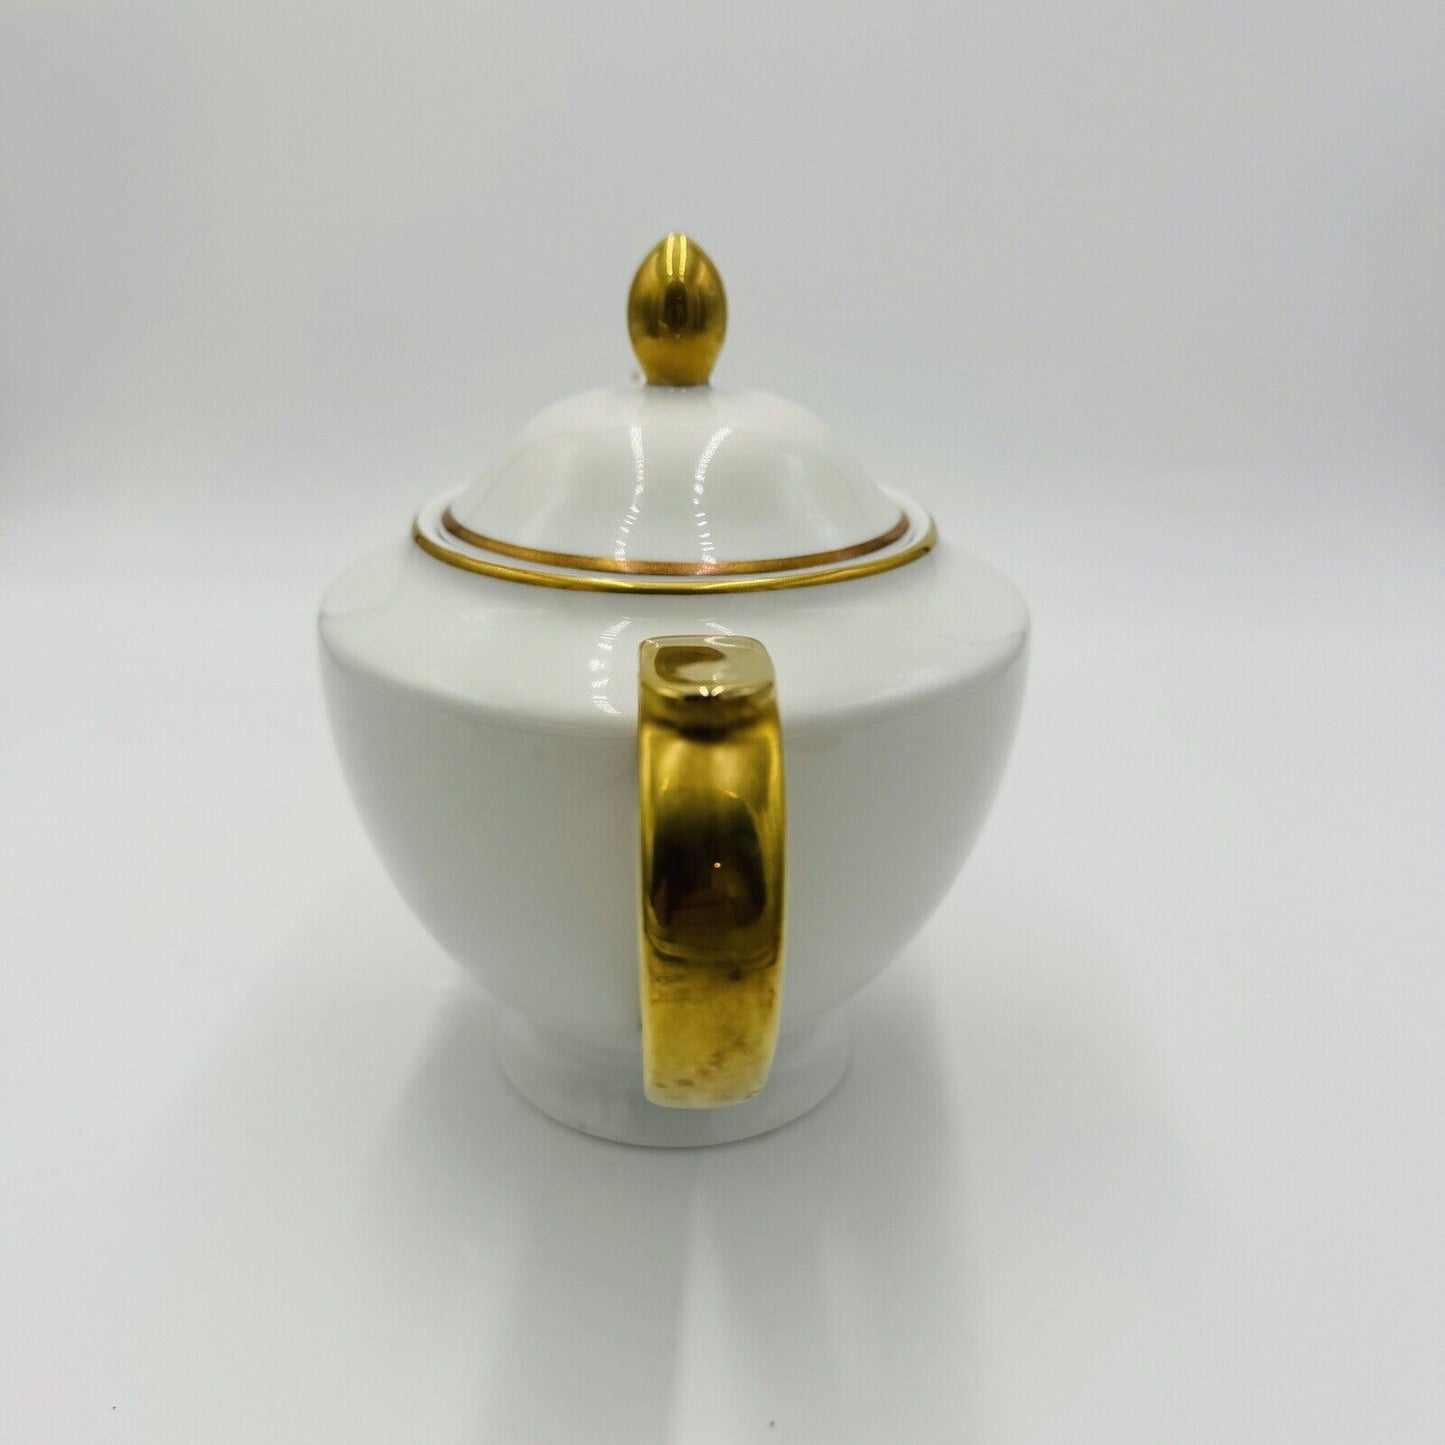 Ralph Lauren Hampton's Tea White Porcelain Teapot Gold Trim Large